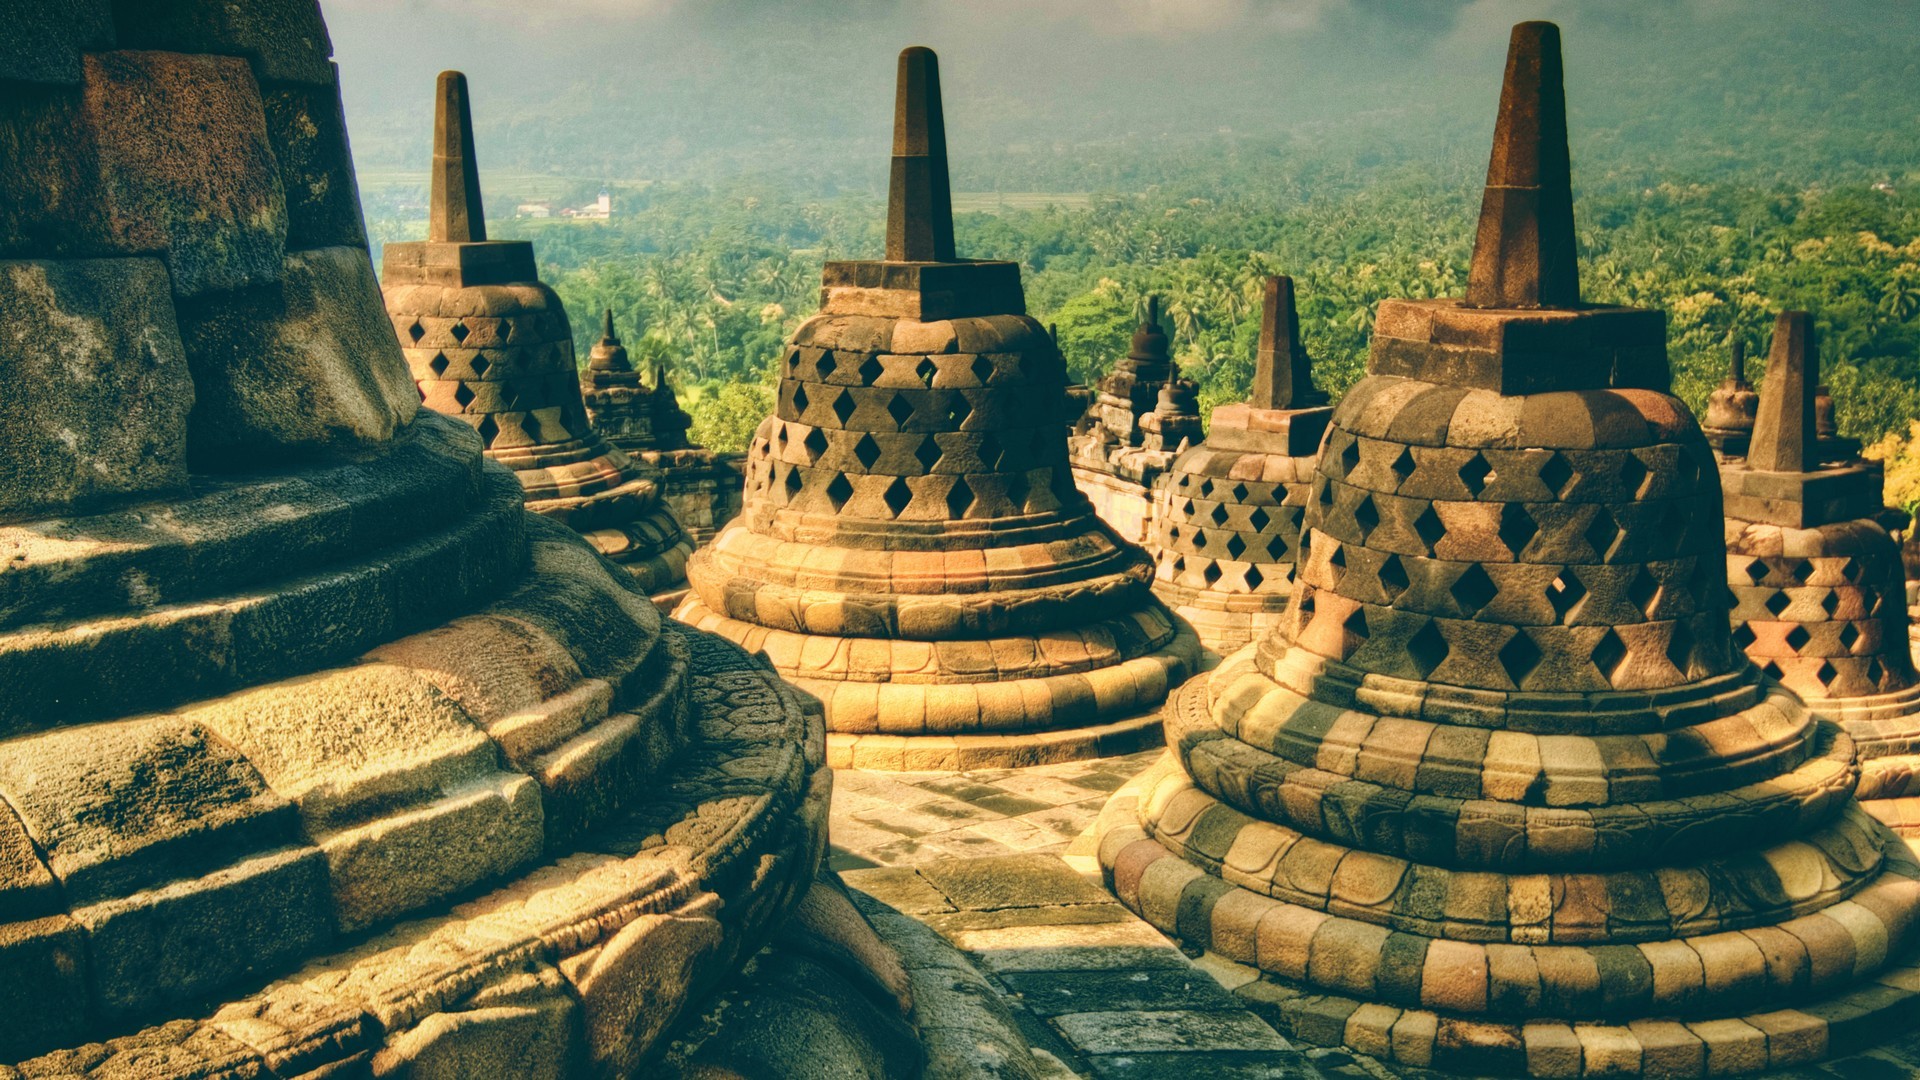 General 1920x1080 Indonesia temple building ancient Borobudur Buddhism Asia